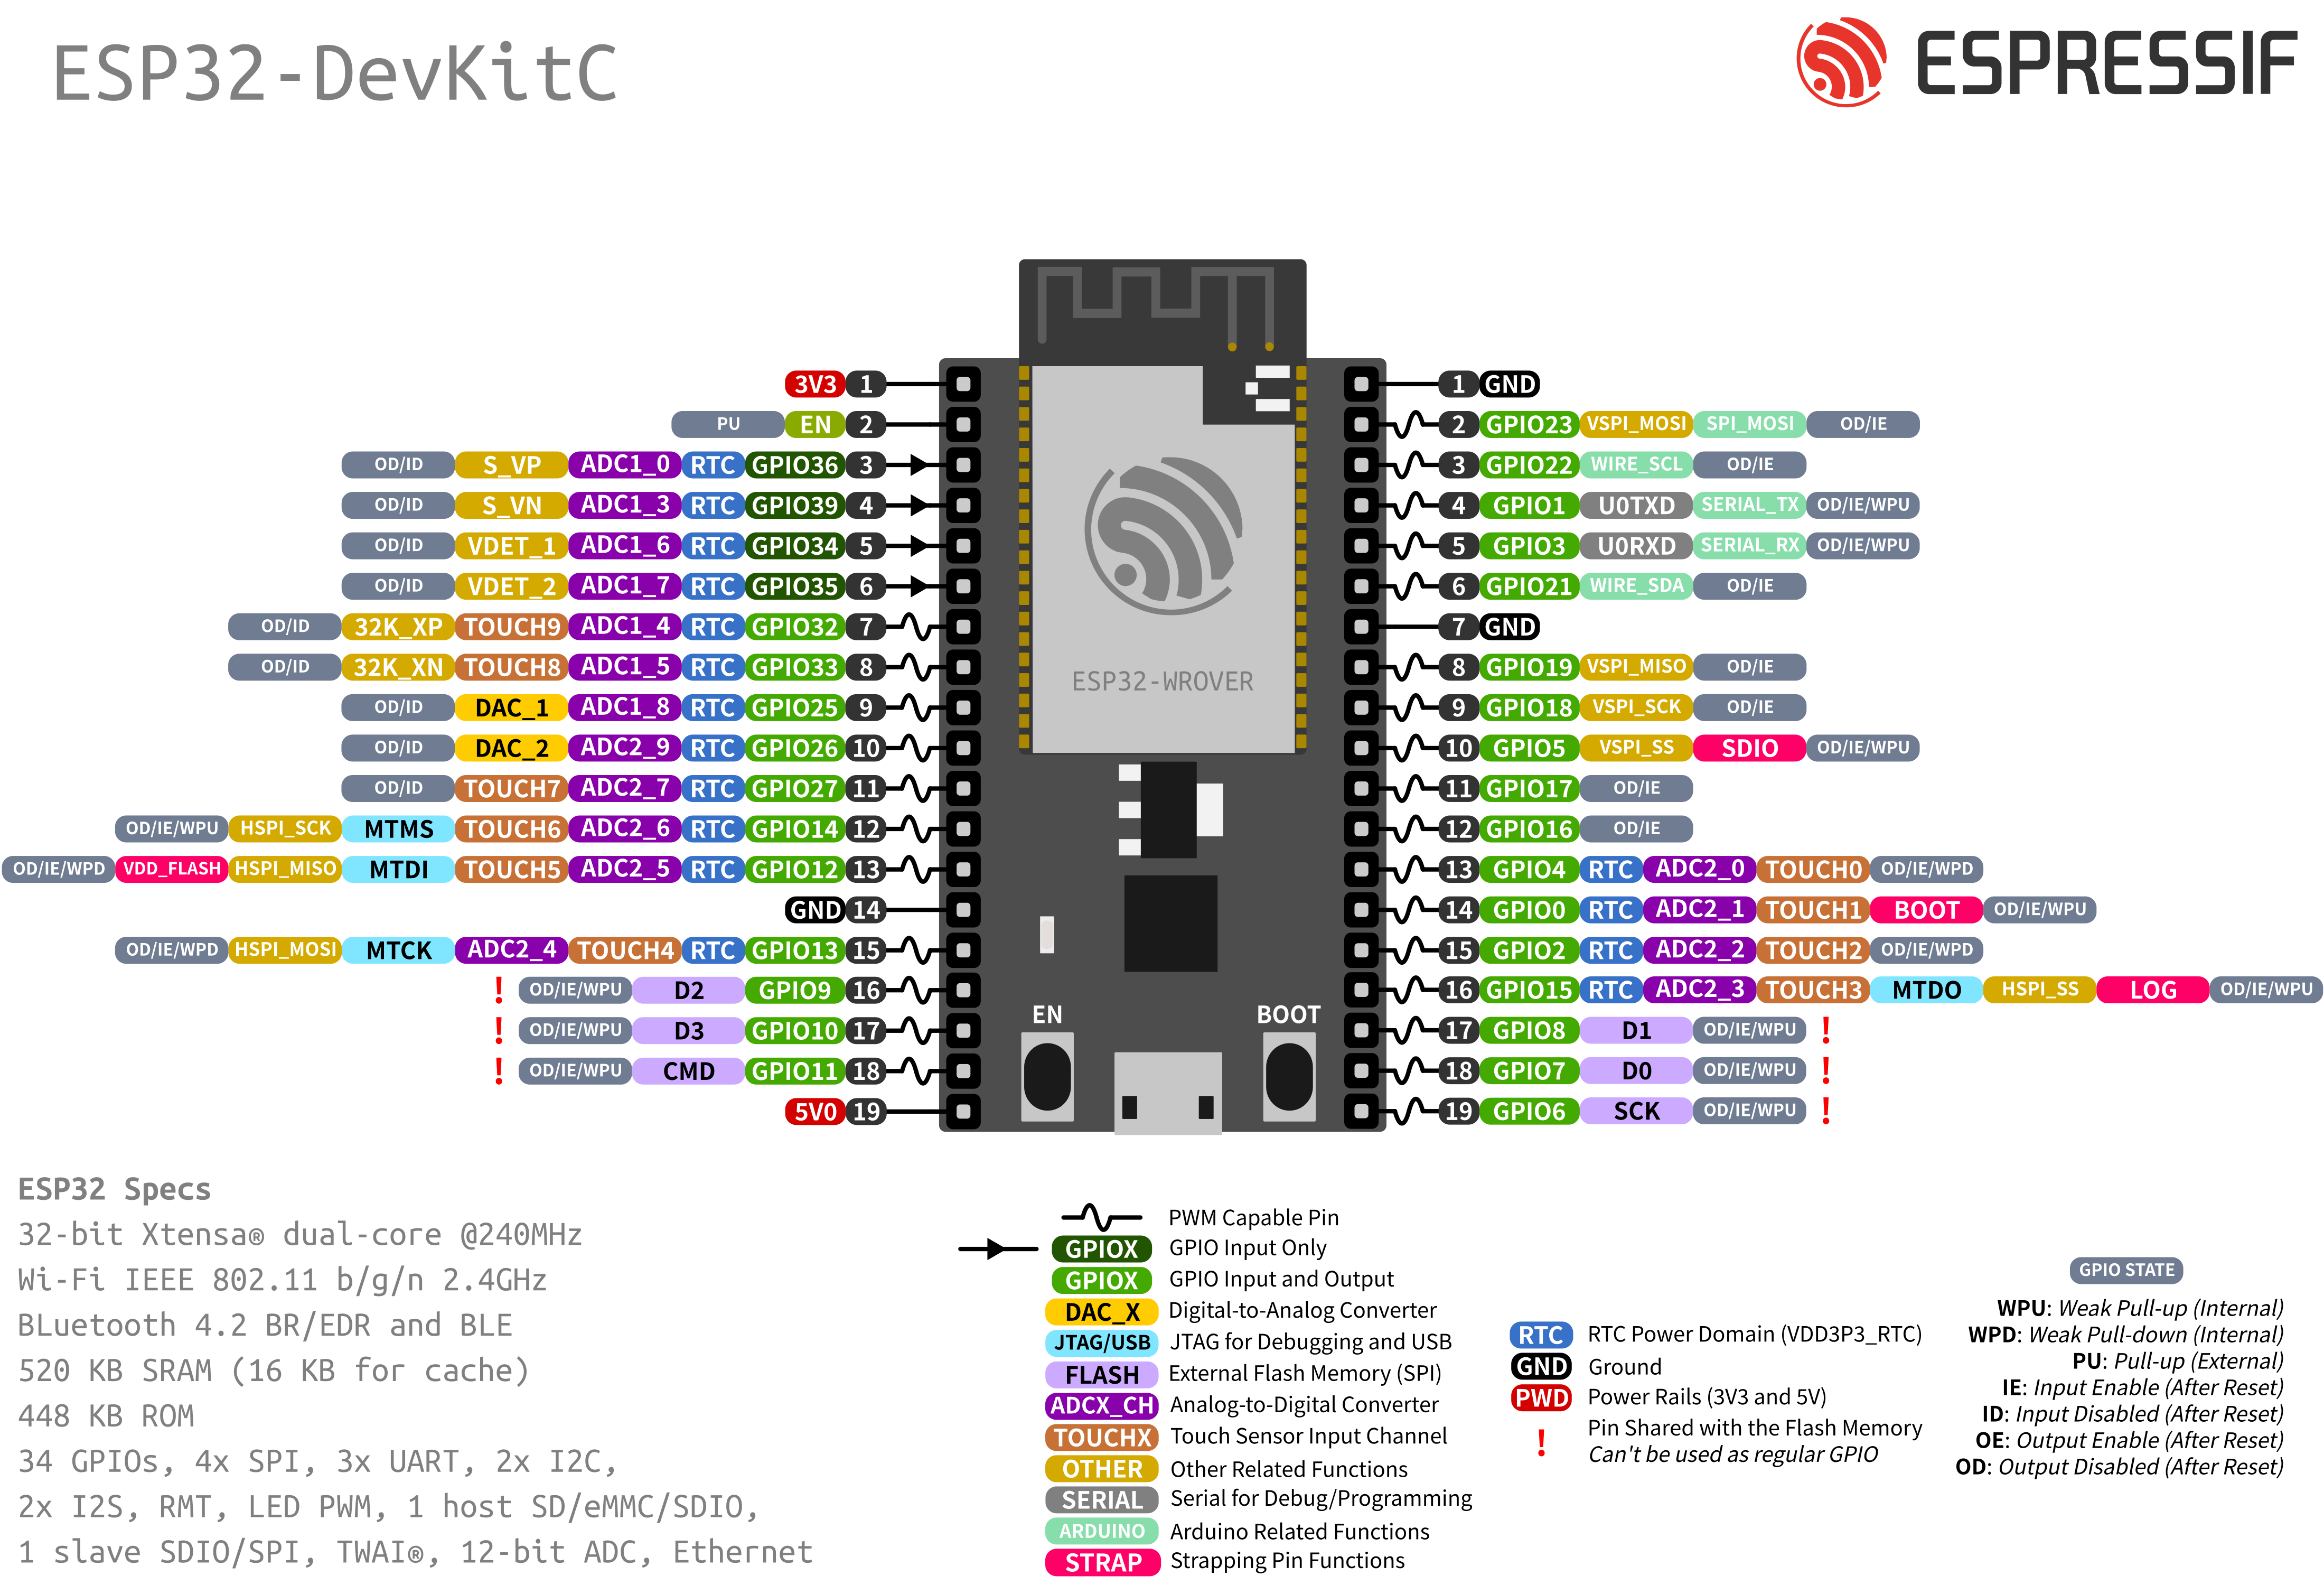 ESP32-DevKitC-1 (click to enlarge)